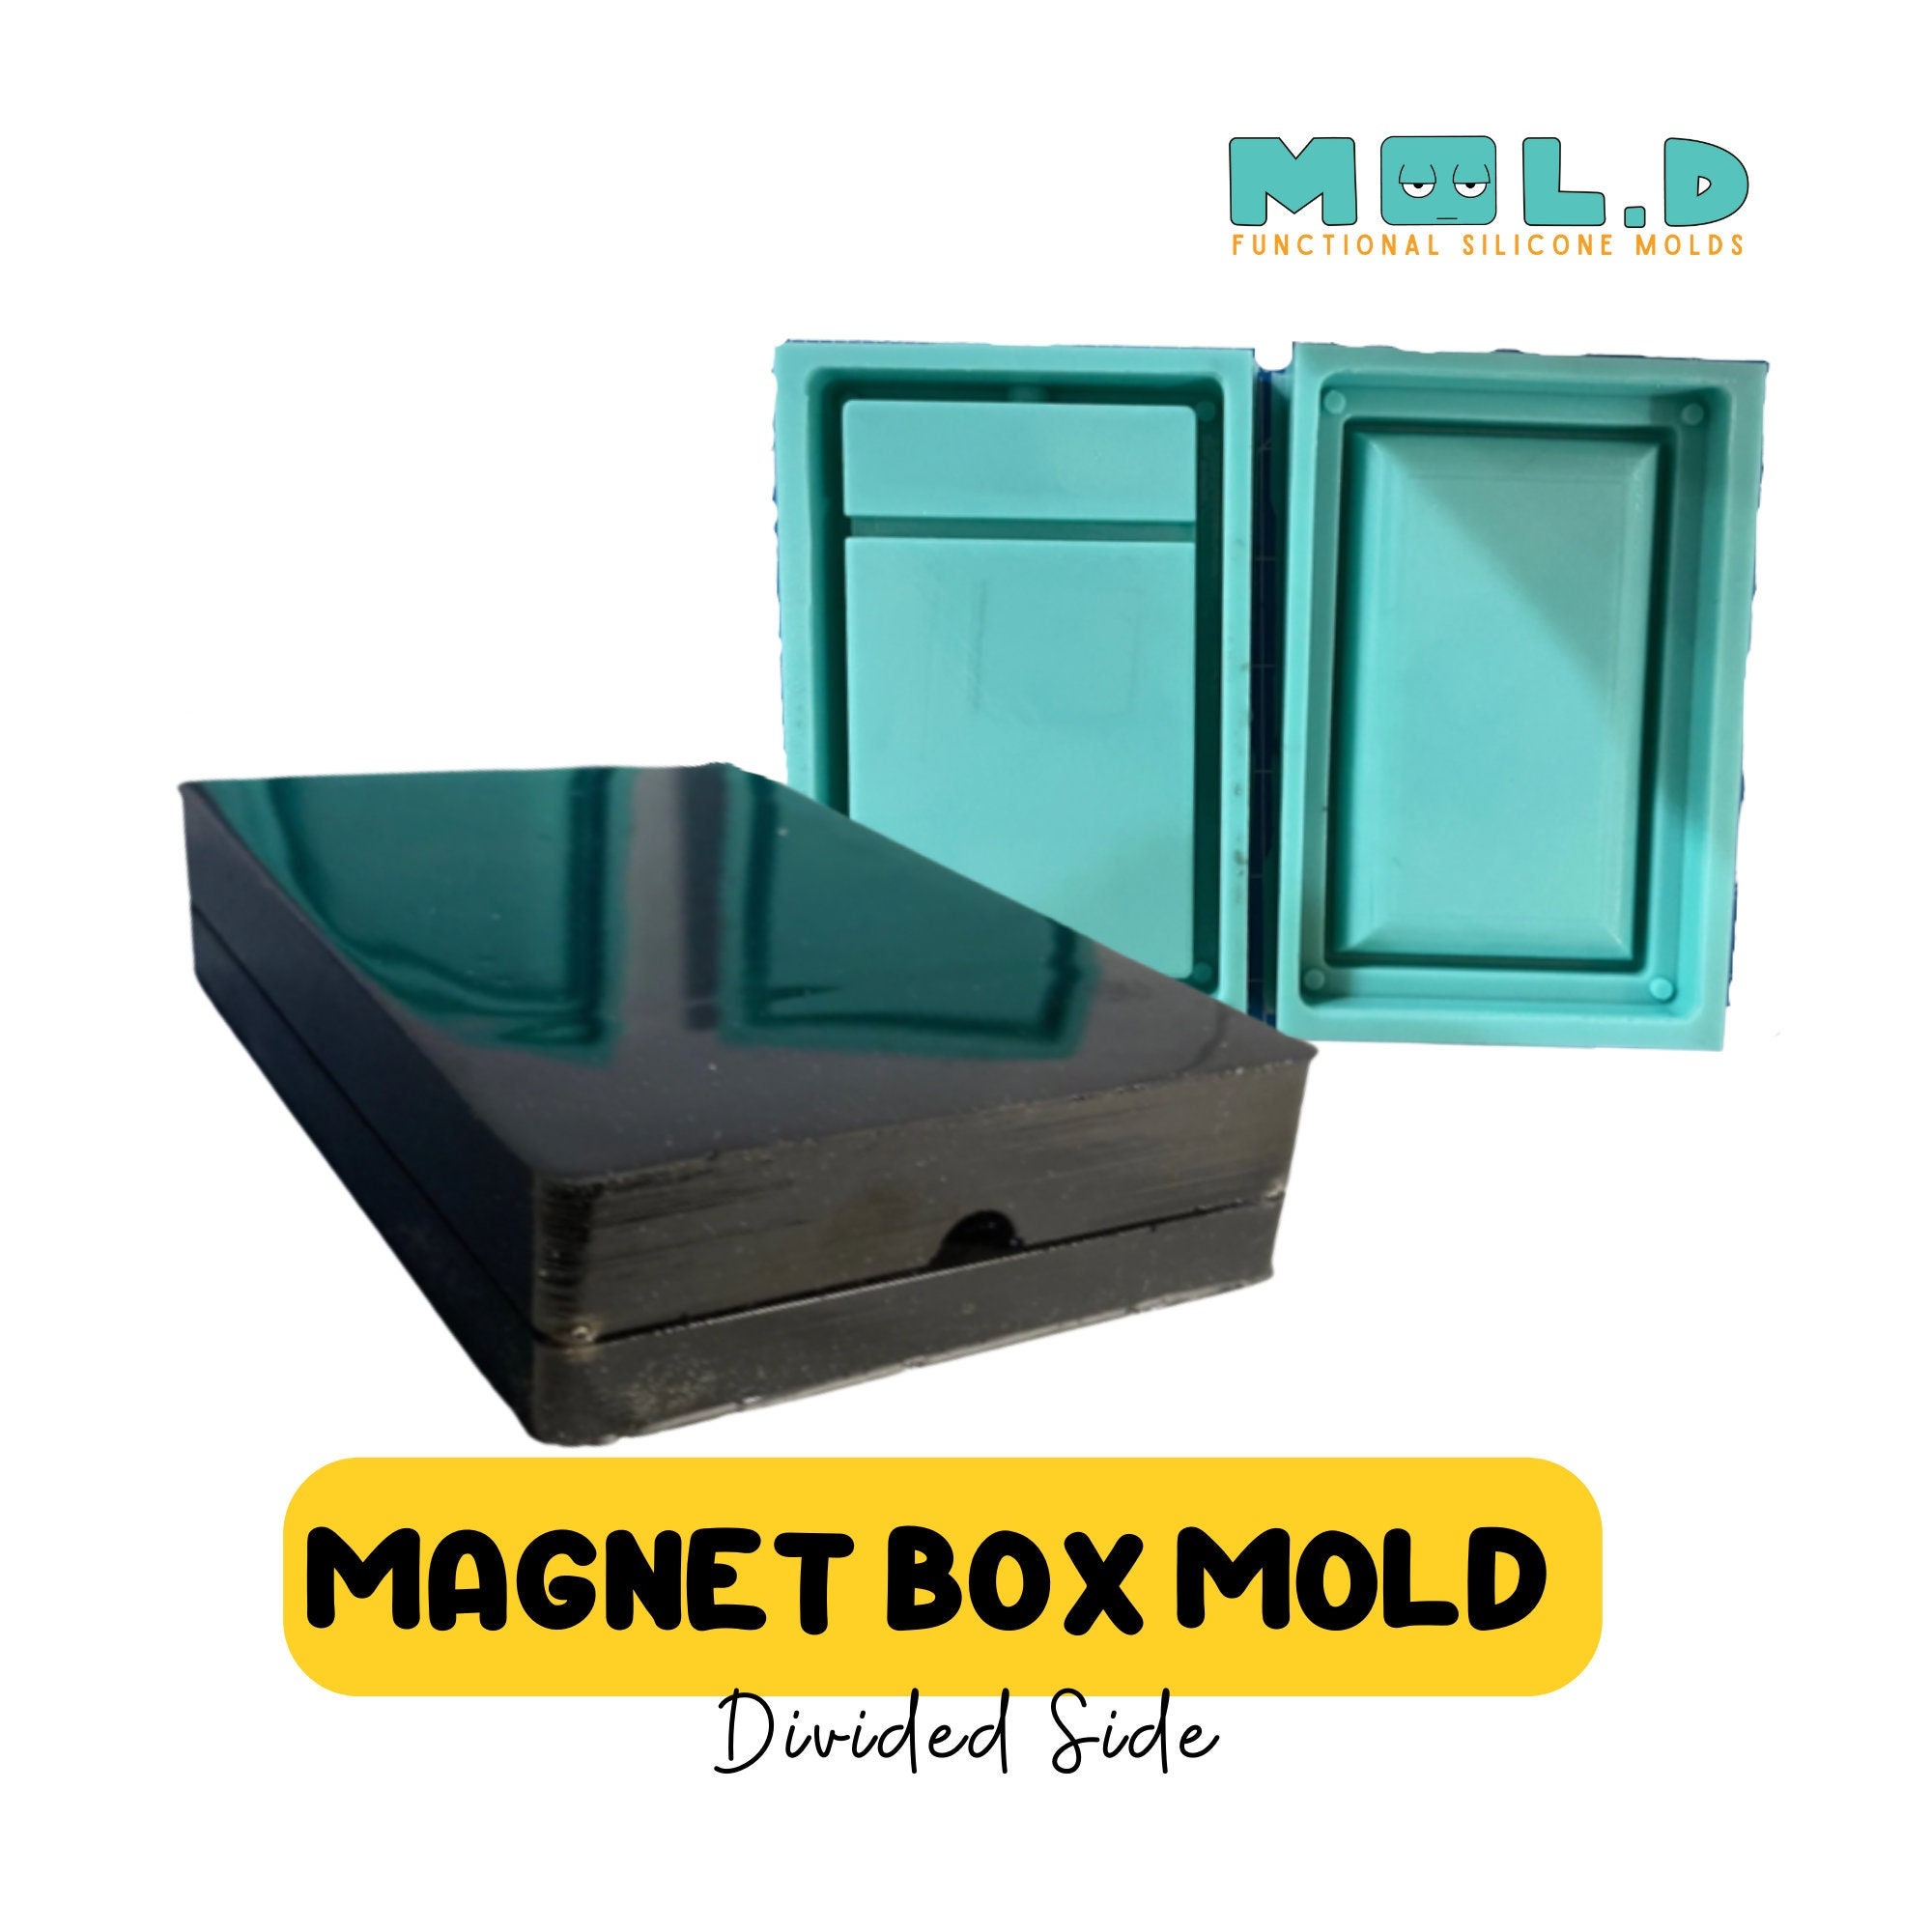 Large Storage Bowl Mold-bowl Silicone Mold-bowl Resin Mold-fruit Storage  Bowl Mold-jewelry Box Mold-epoxy Resin Craft Mold-home Decor Mold 